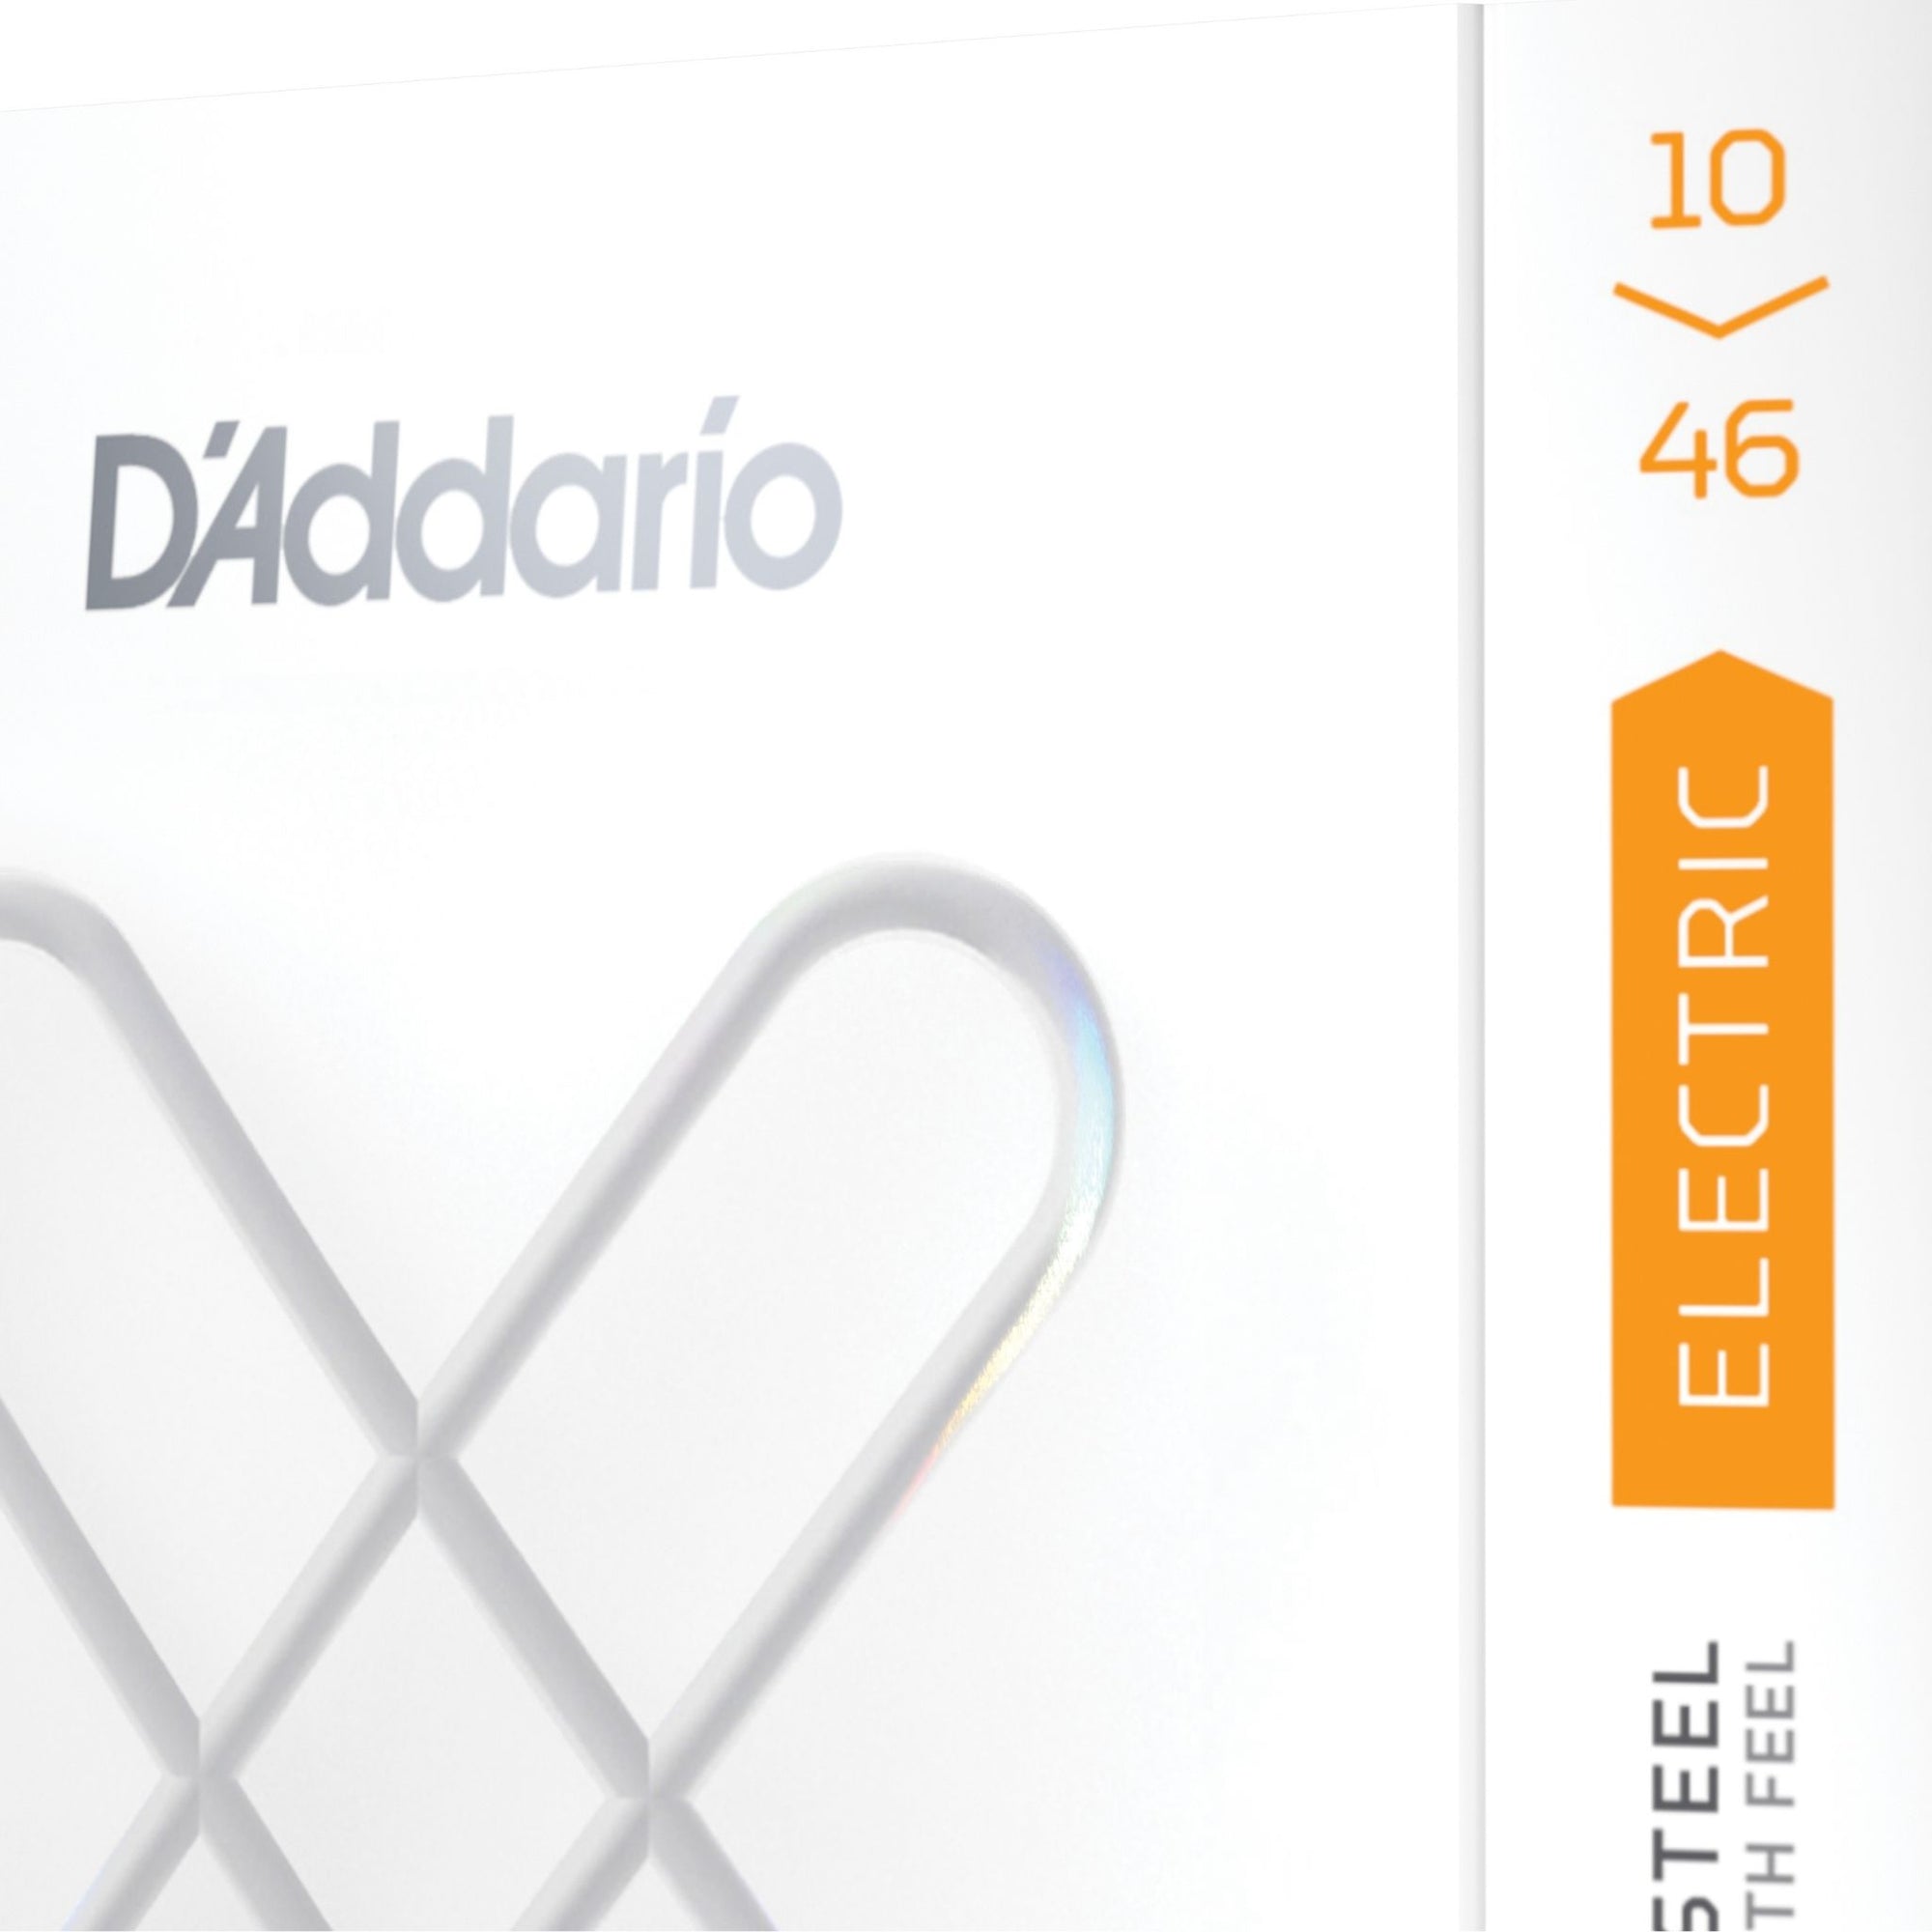 D'Addario XSE1046 Coated Nickel-plated Steel Light Electric Guitar Strings 10-46 Package Side